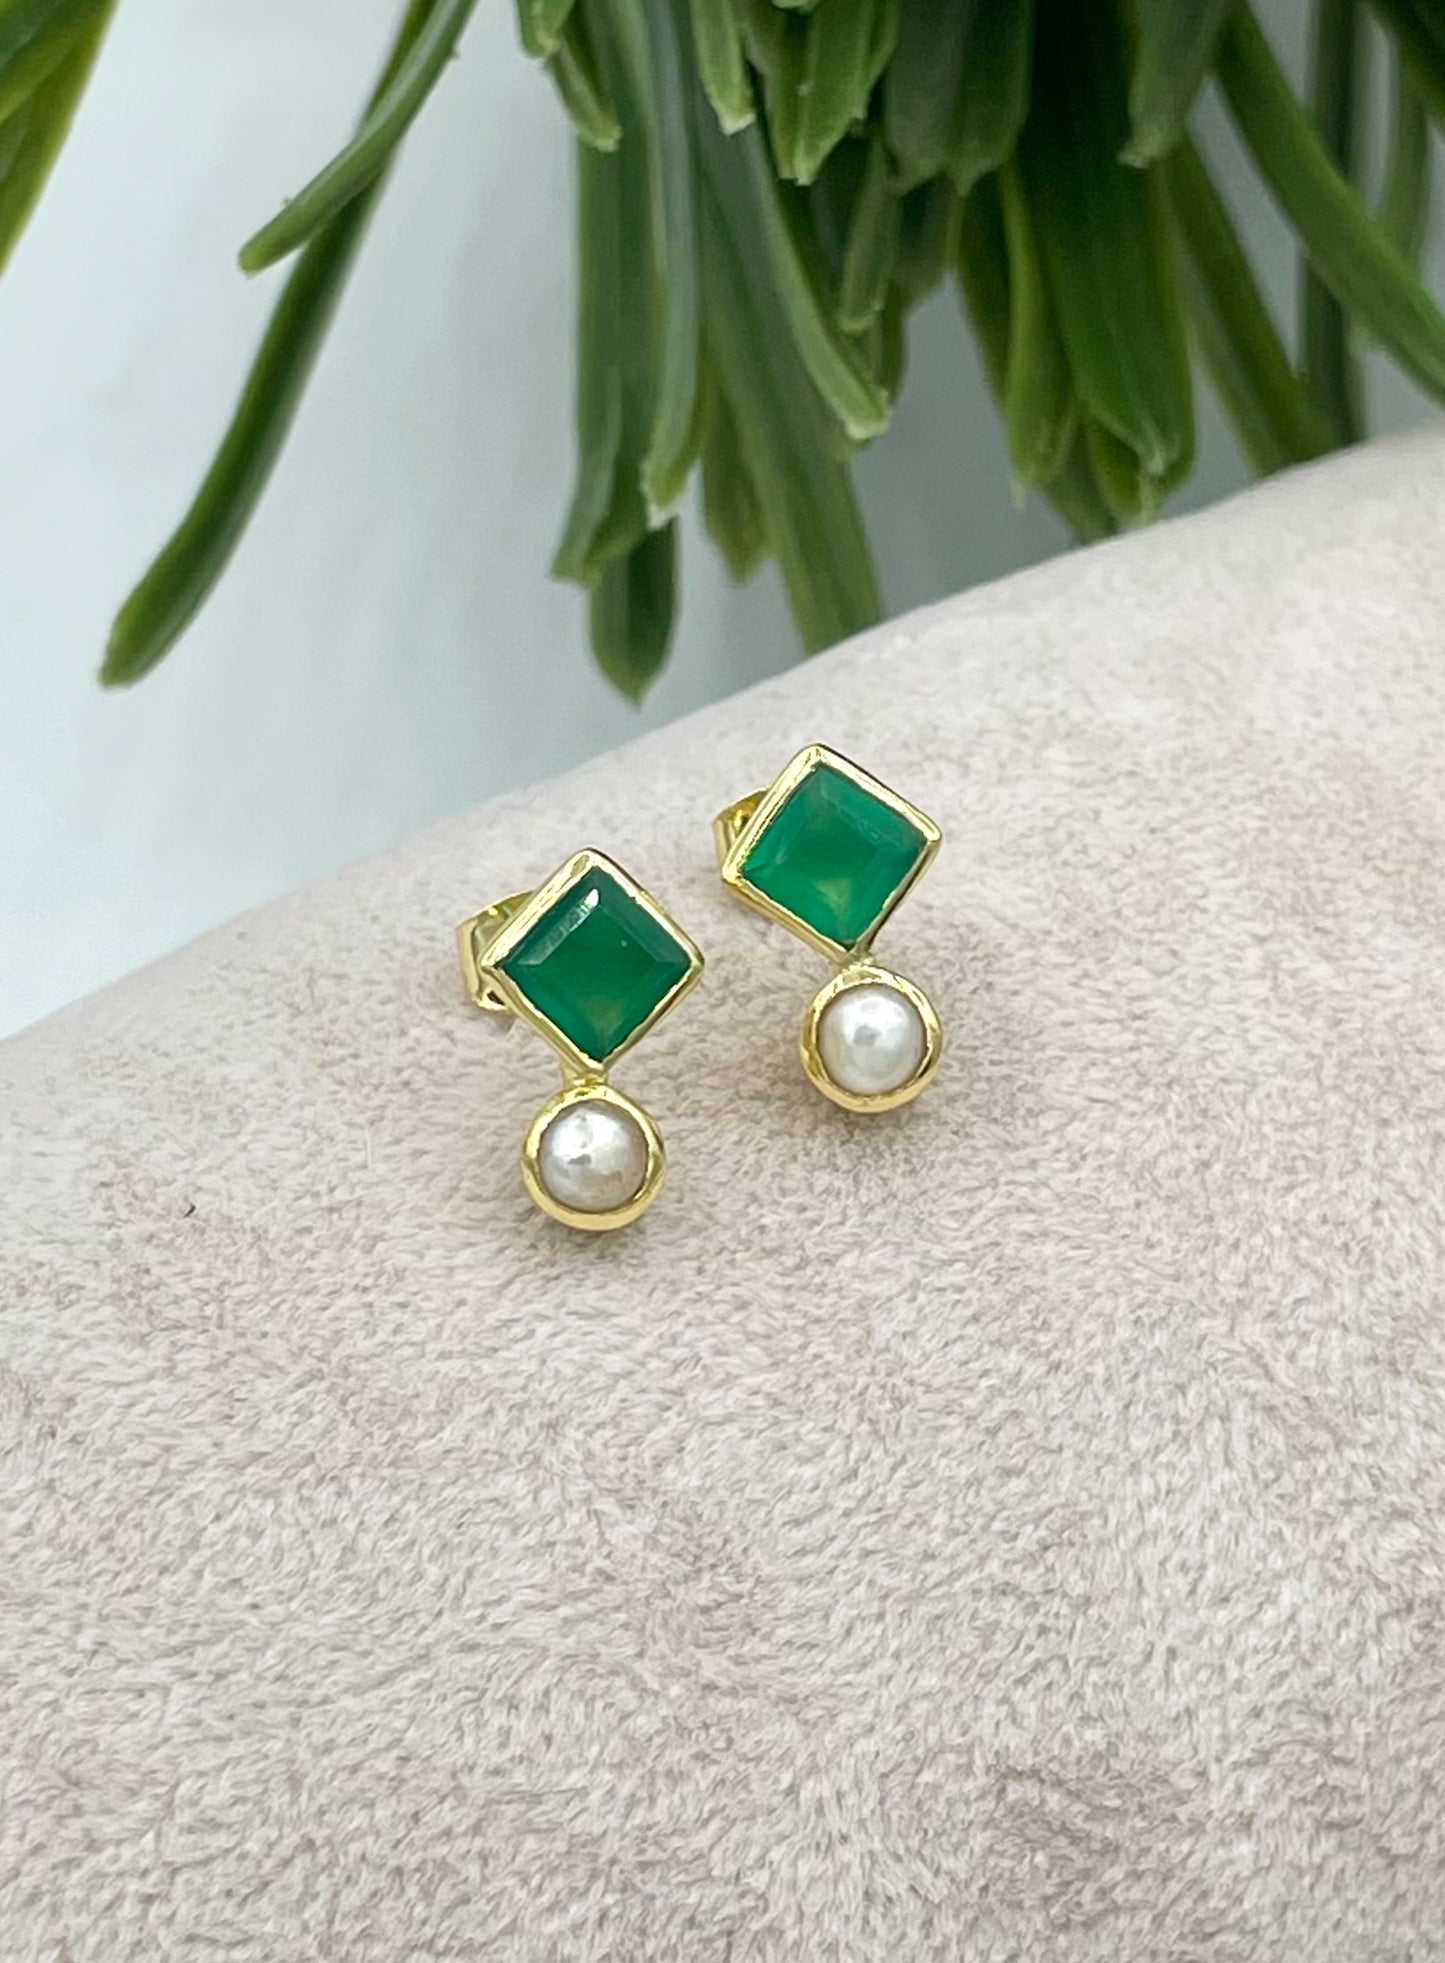 Gold pearl and green onyx stud earrings